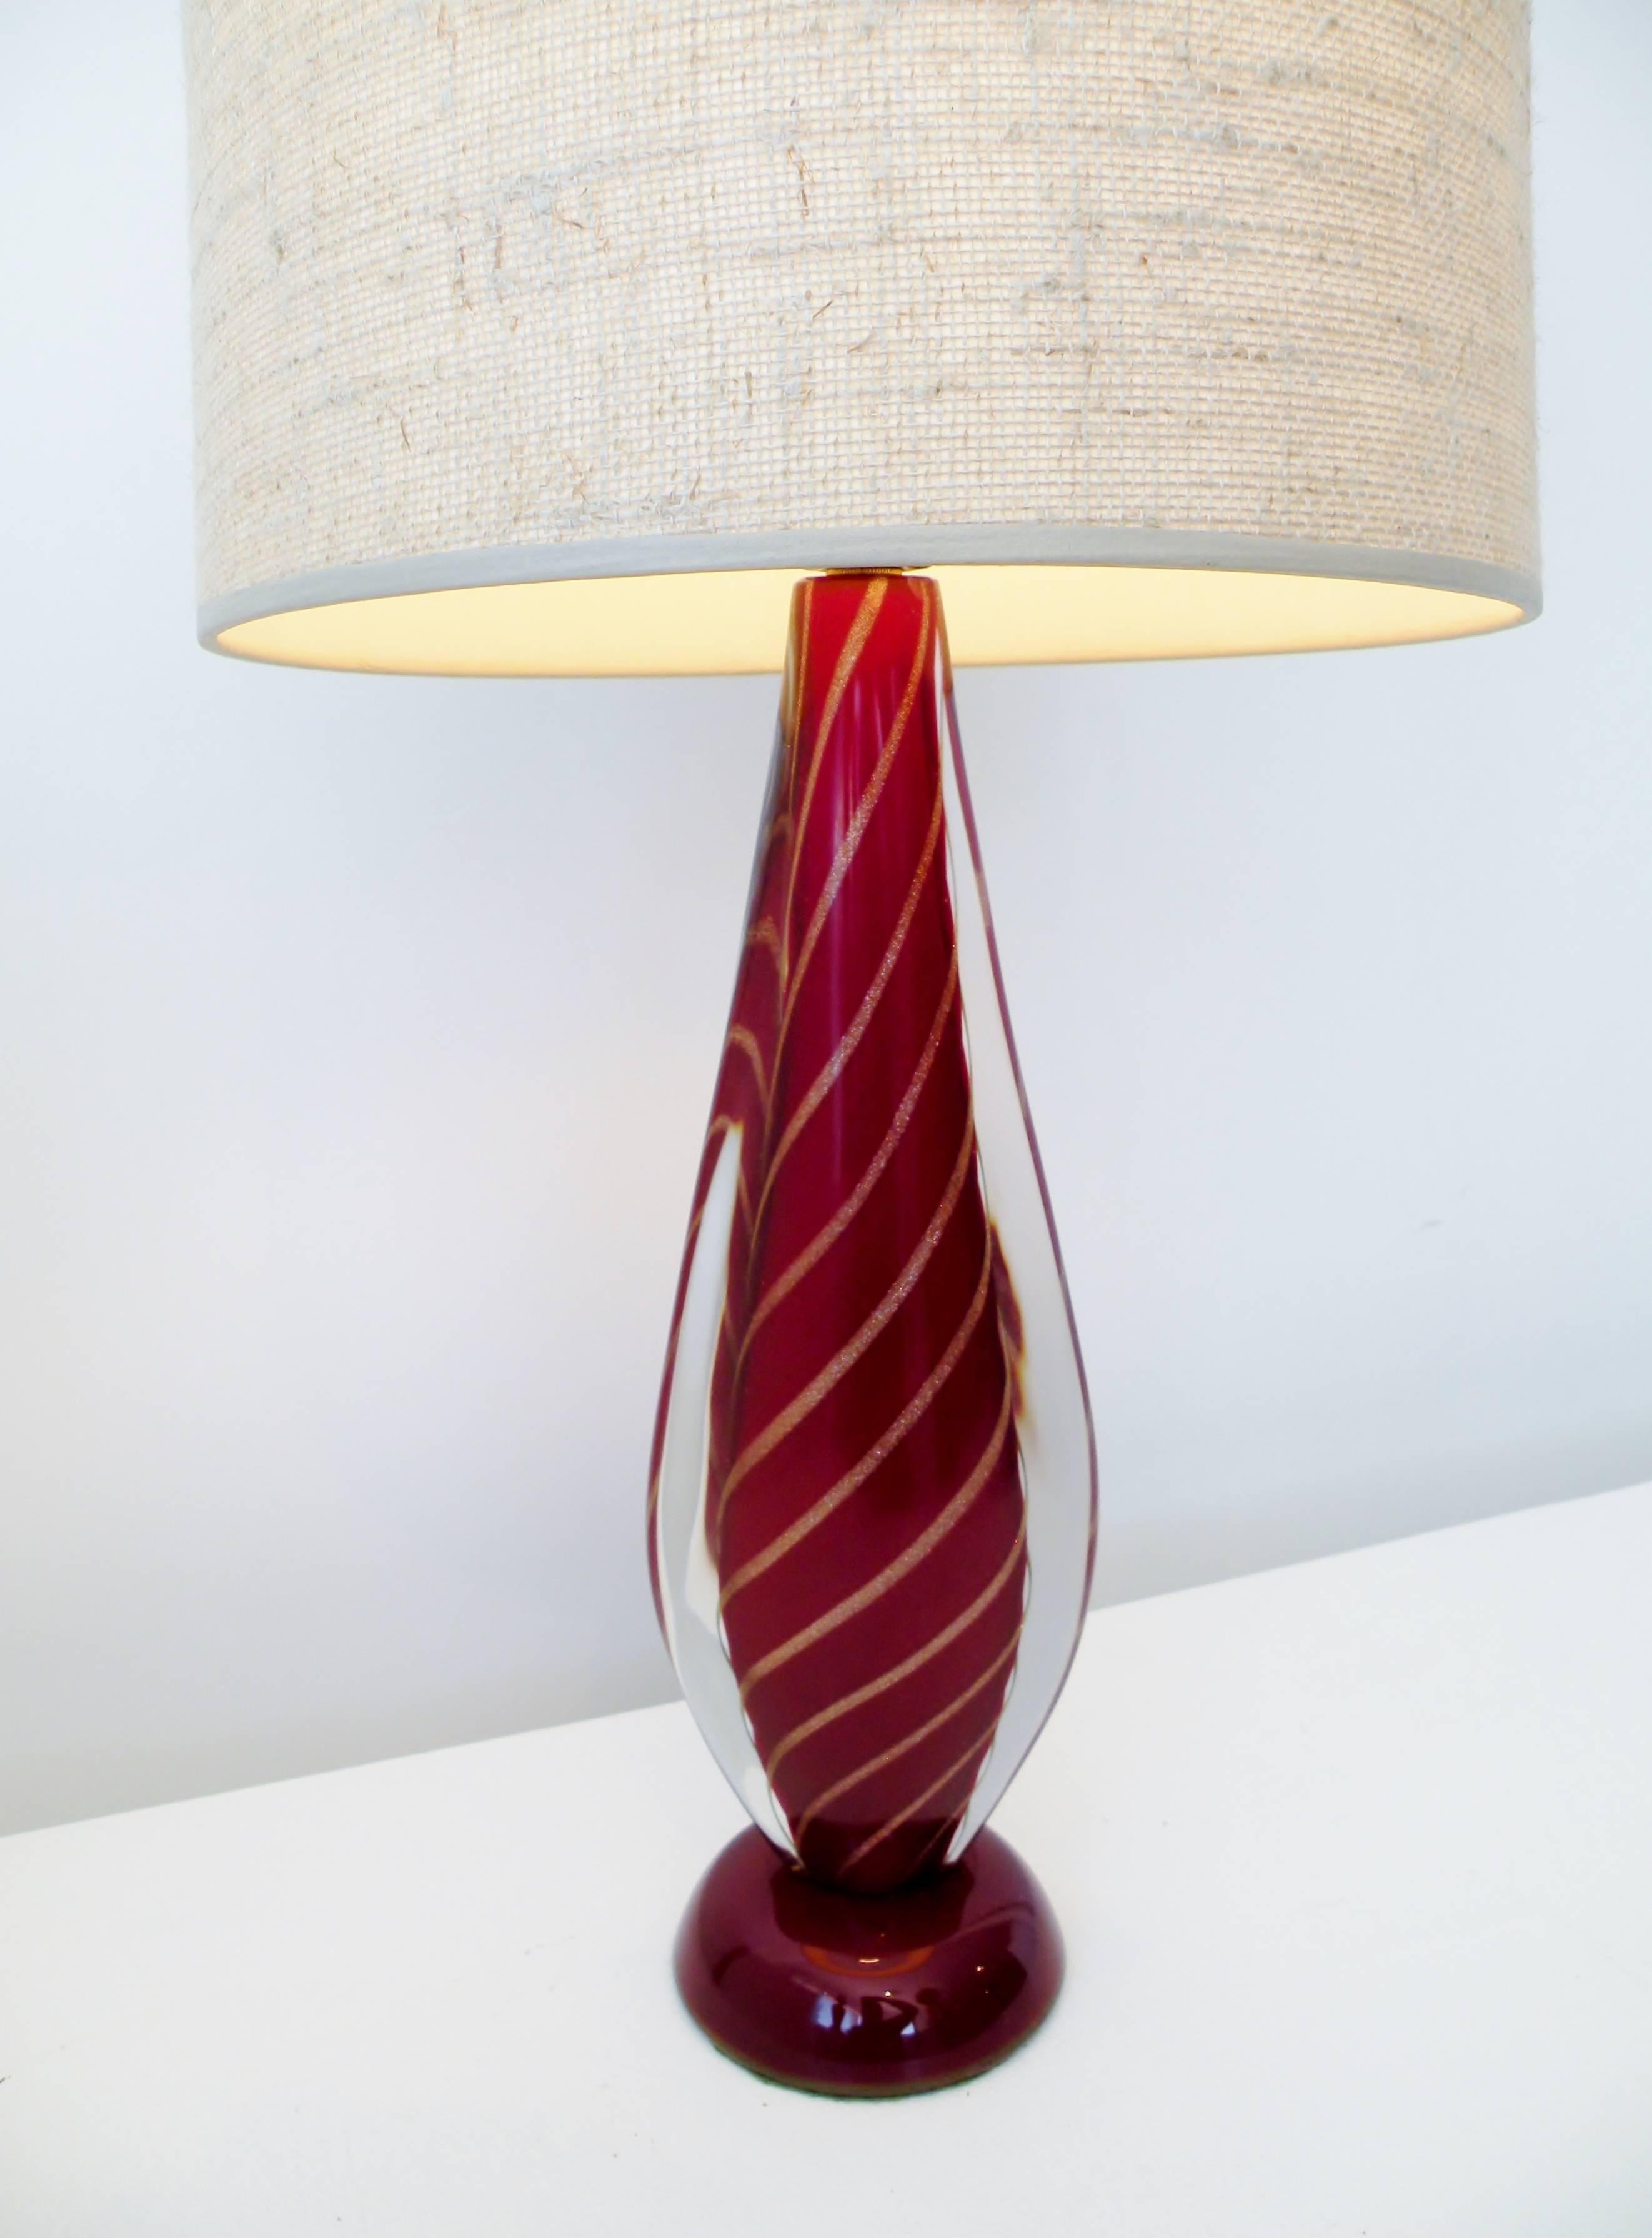 Hand-Crafted Seguso Sommerso Flavio Poli Attributed Italian Murano Glass Table Lamp